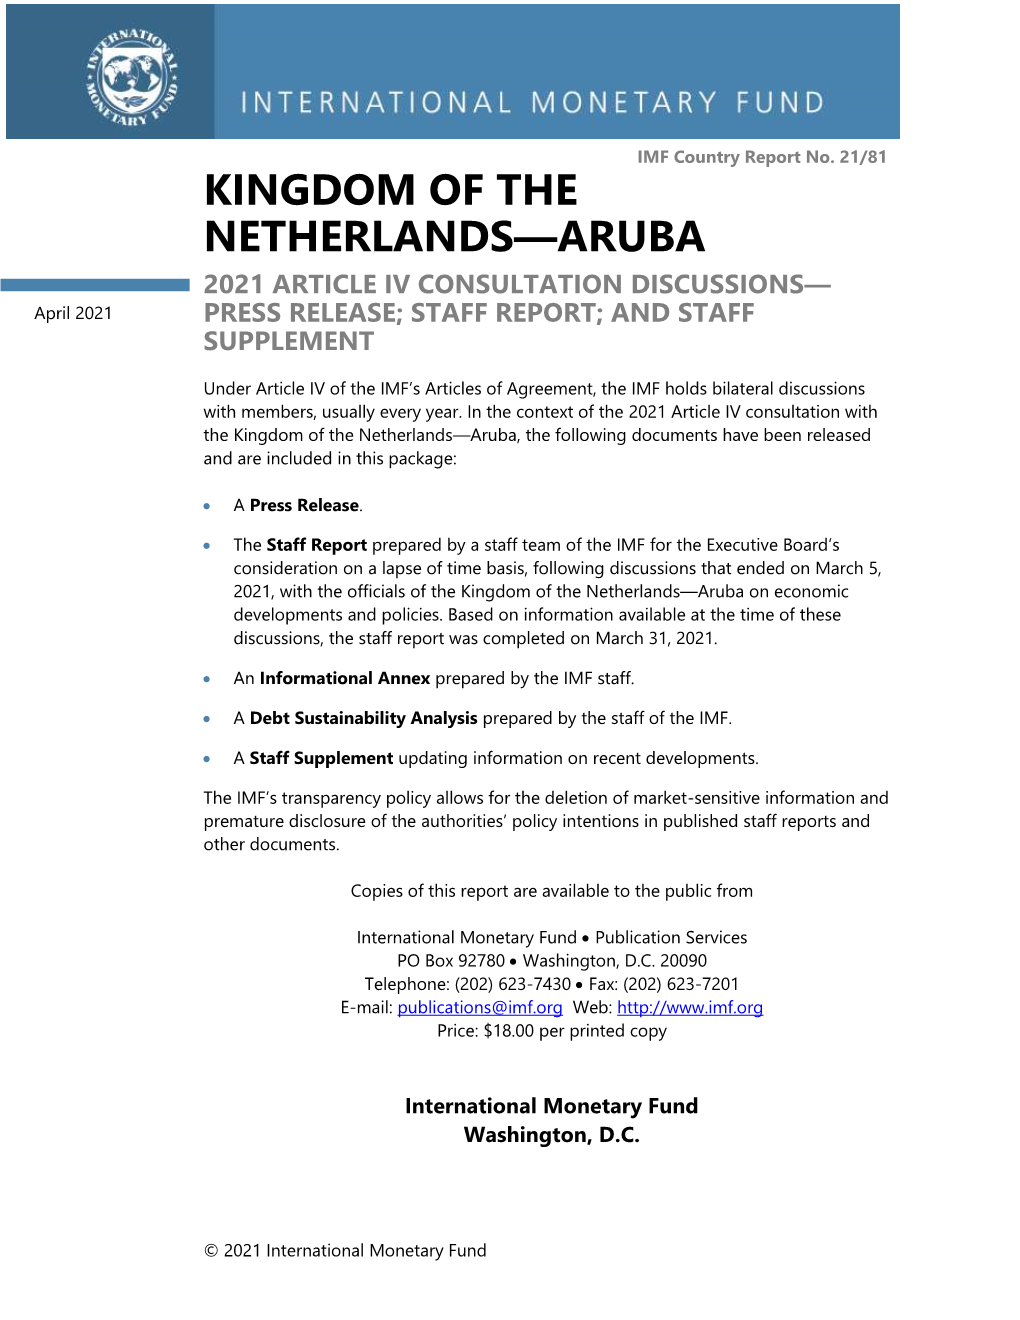 Kingdom of the Netherlands—Aruba: 2021 Article IV